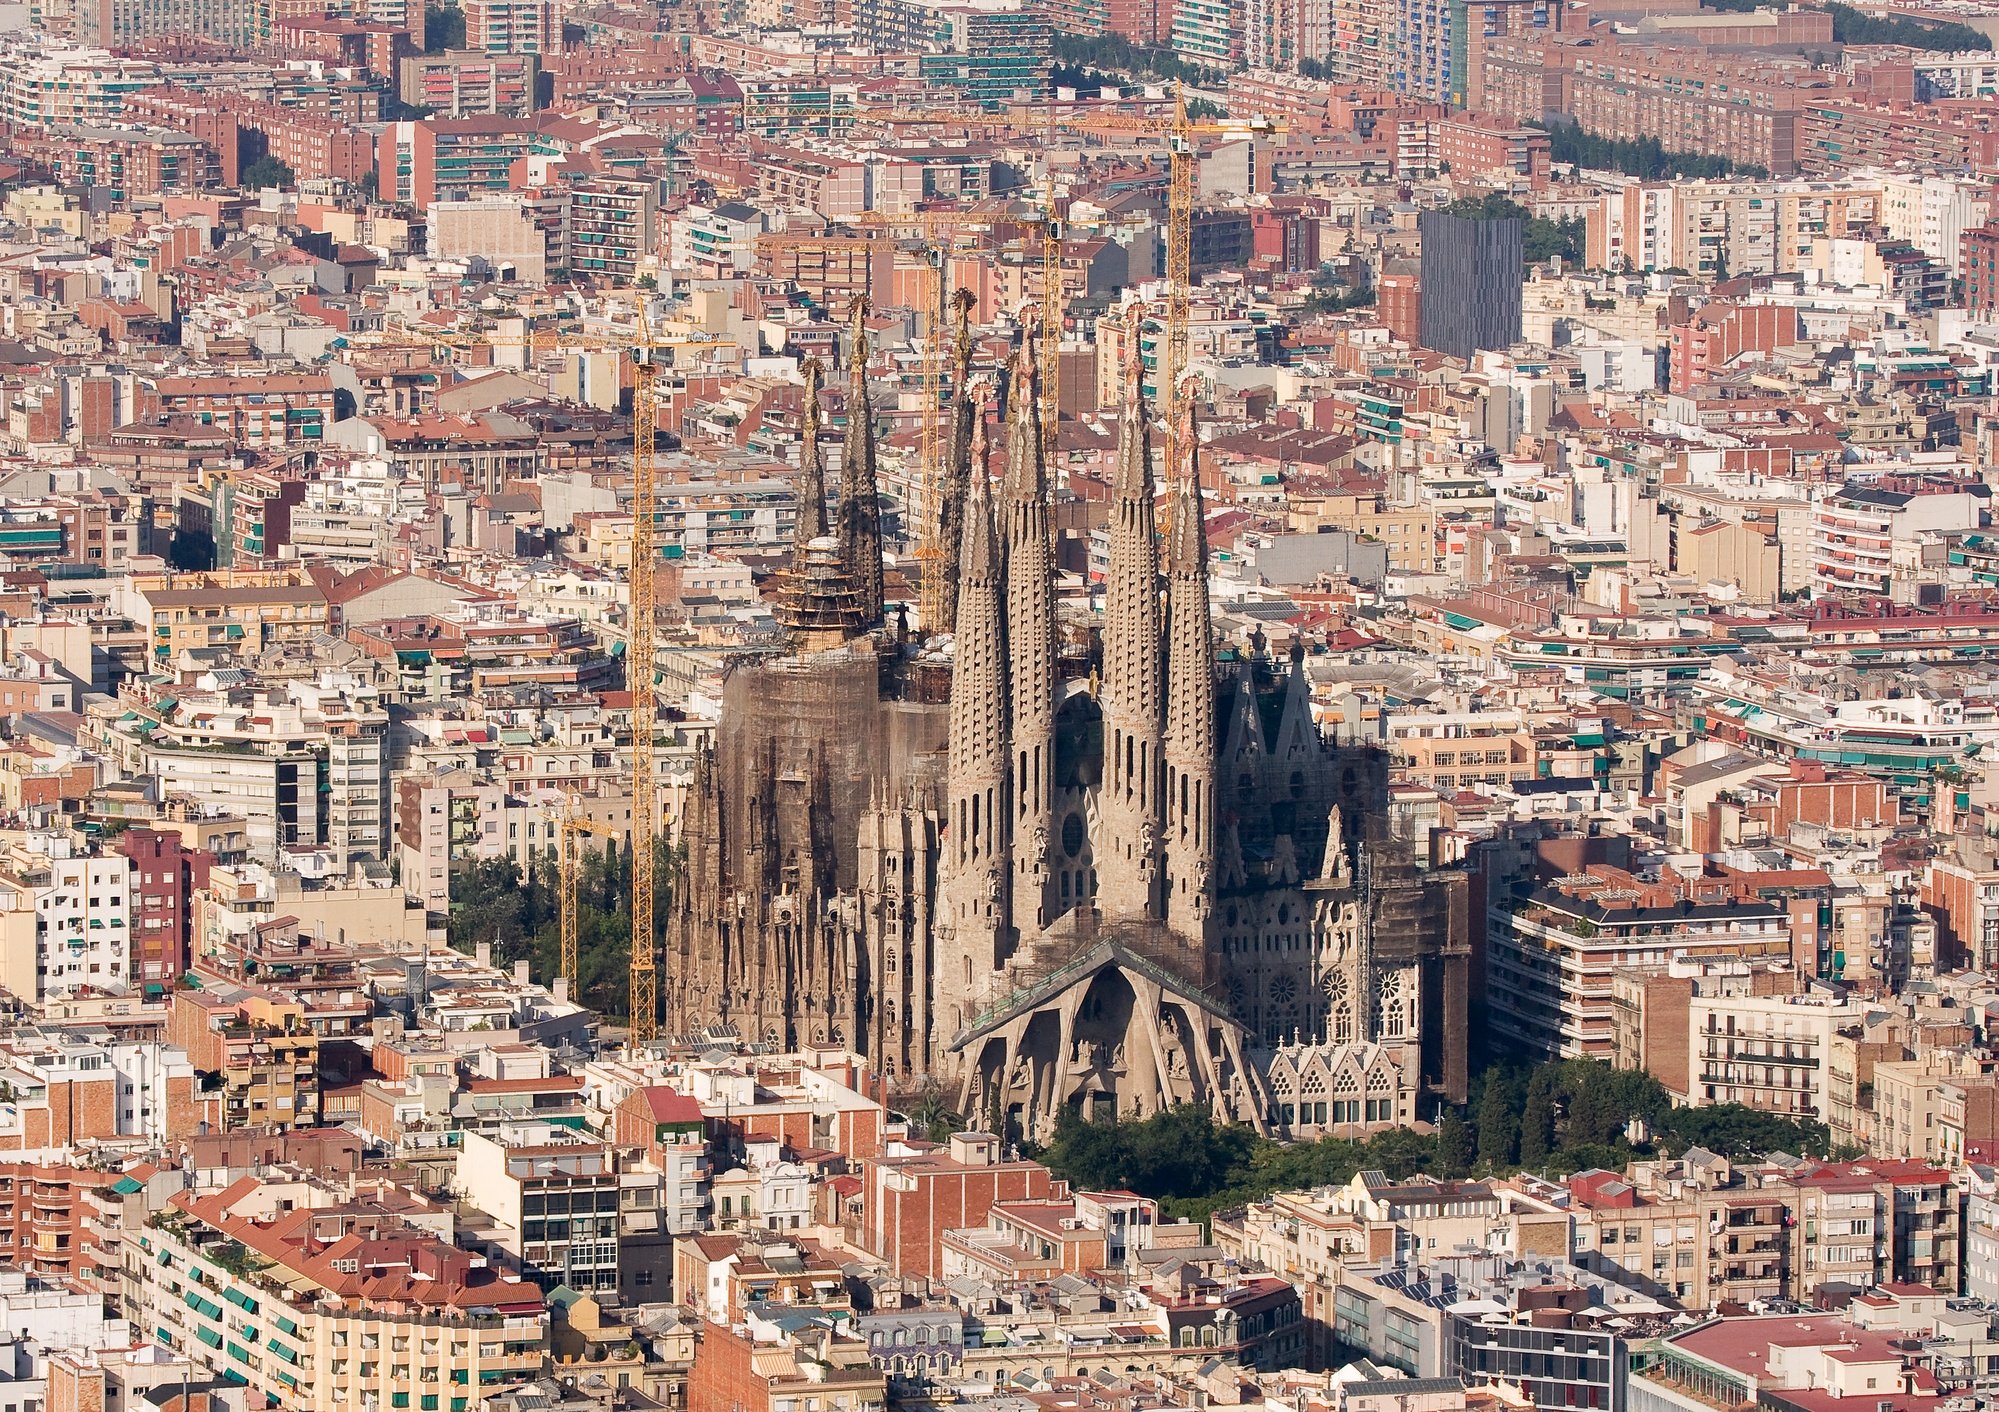 La Sagrada Familia Basilica in Barcelona, Spain 